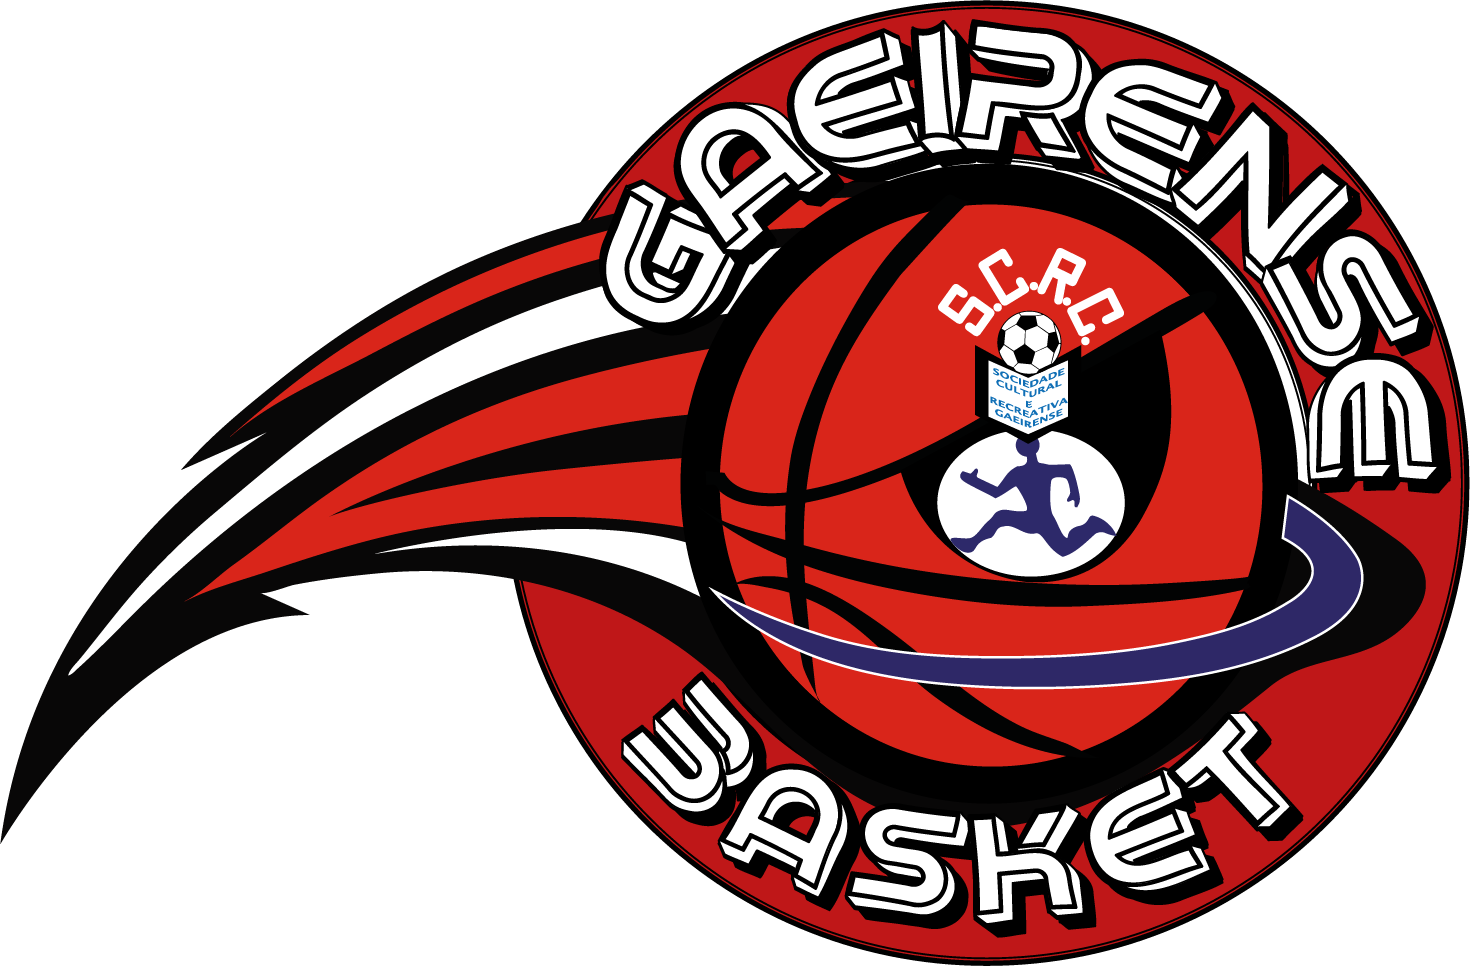 SCR Gaeirense Basket